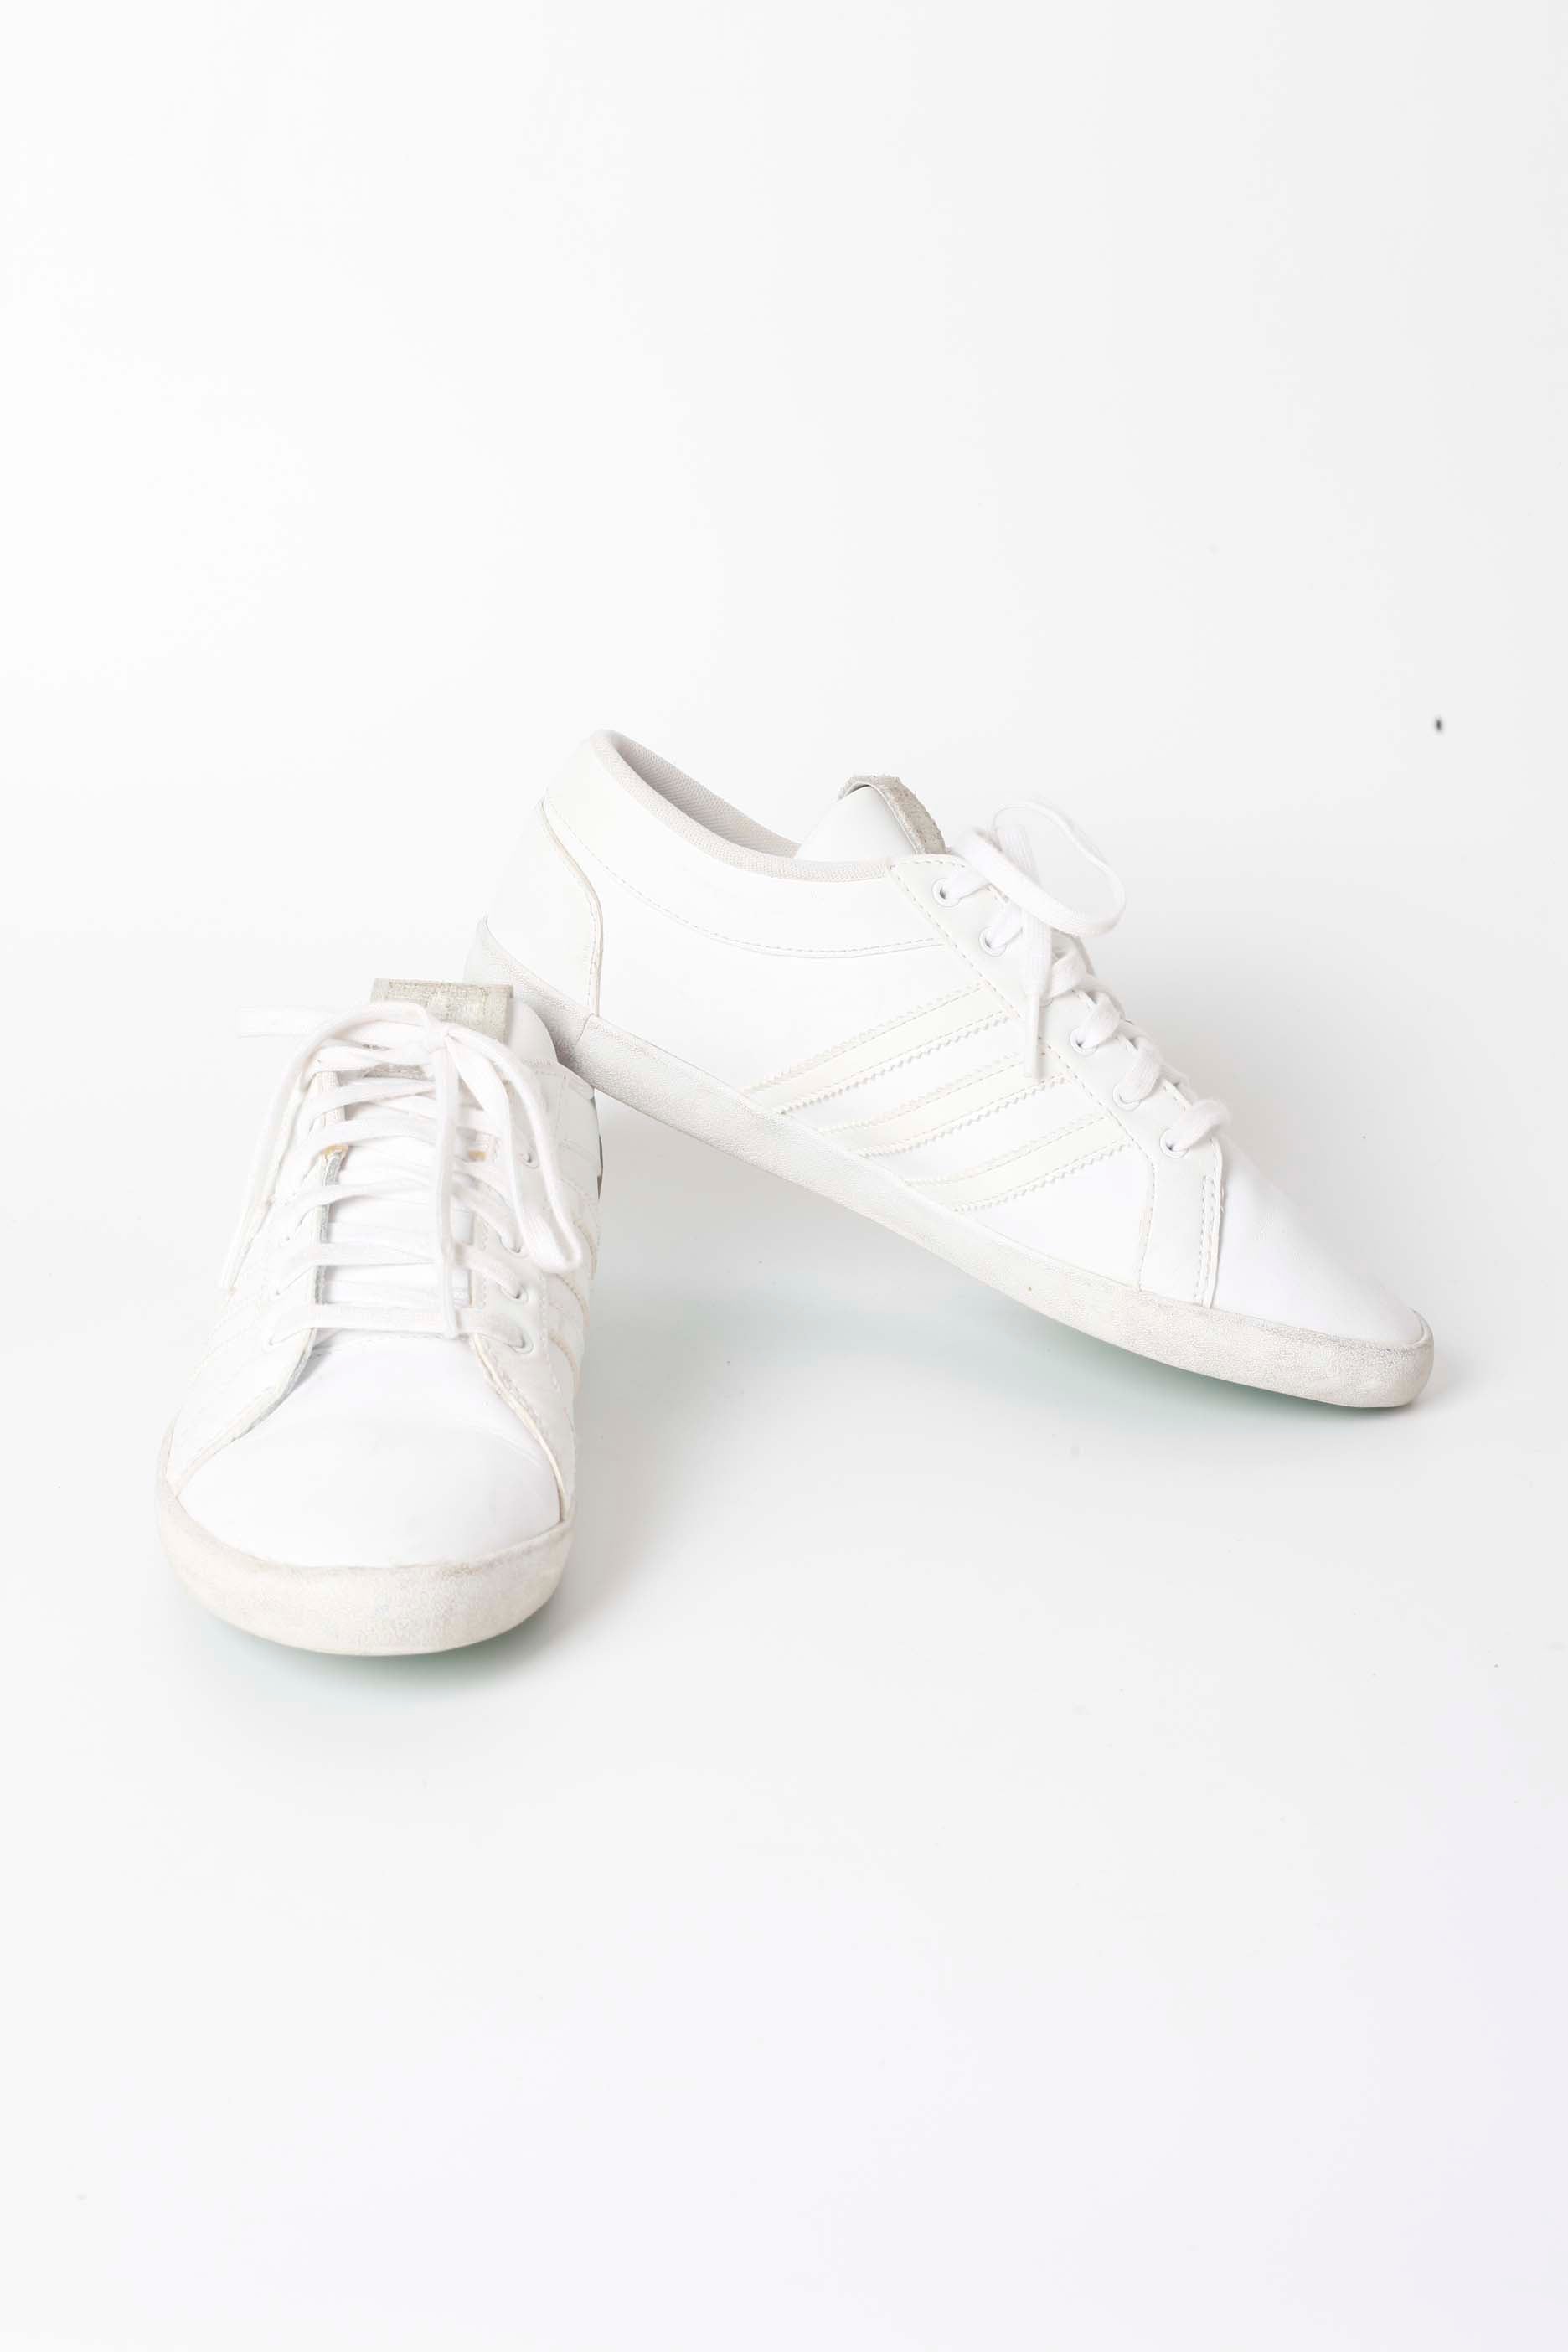 White Tennis Sneakers